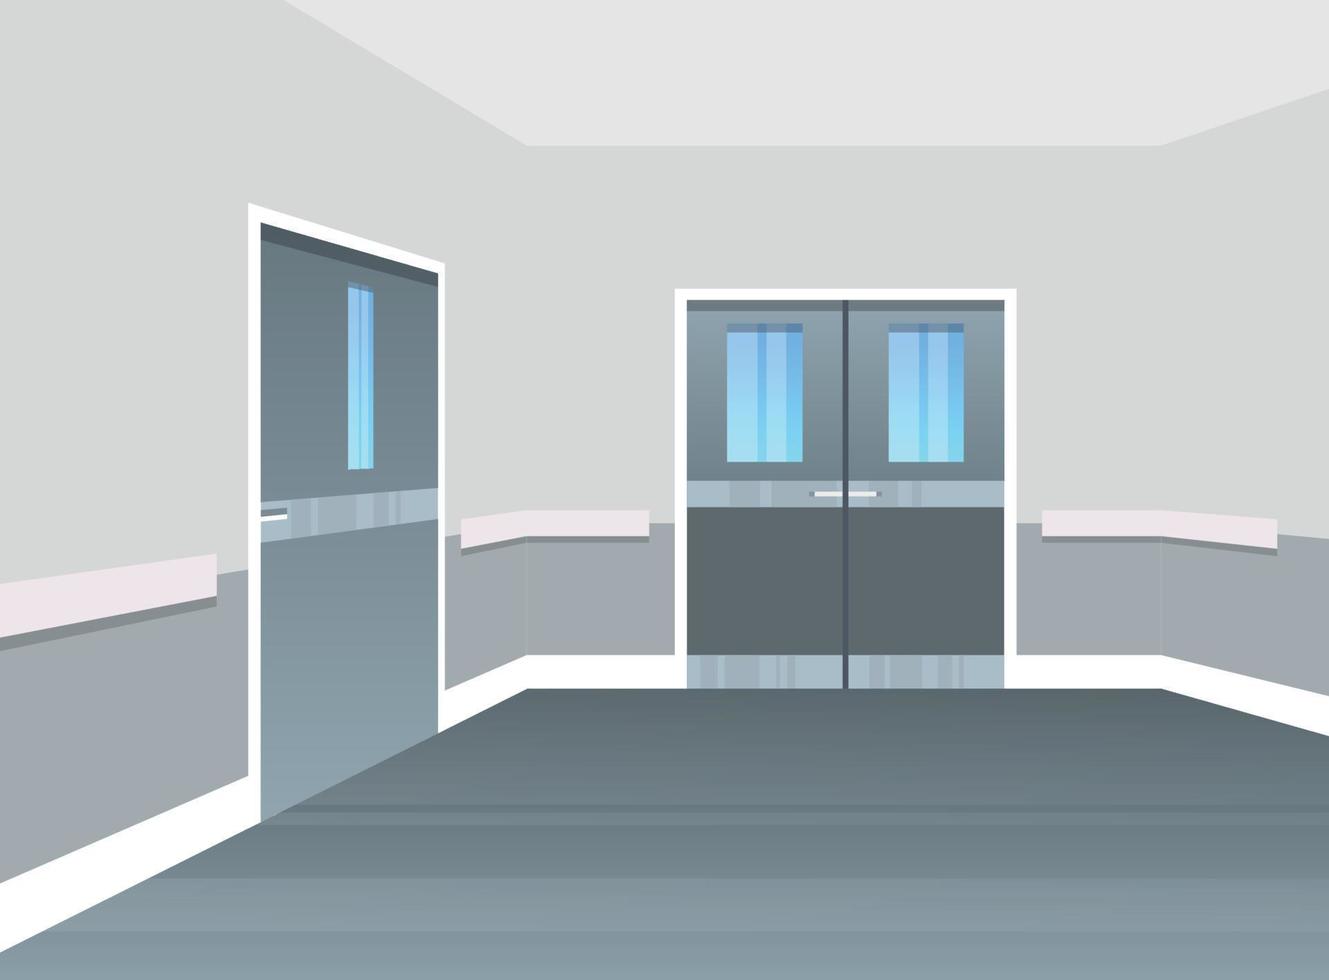 Empty hospital corridor area no people and modern hospital interior flat design illustration. vector